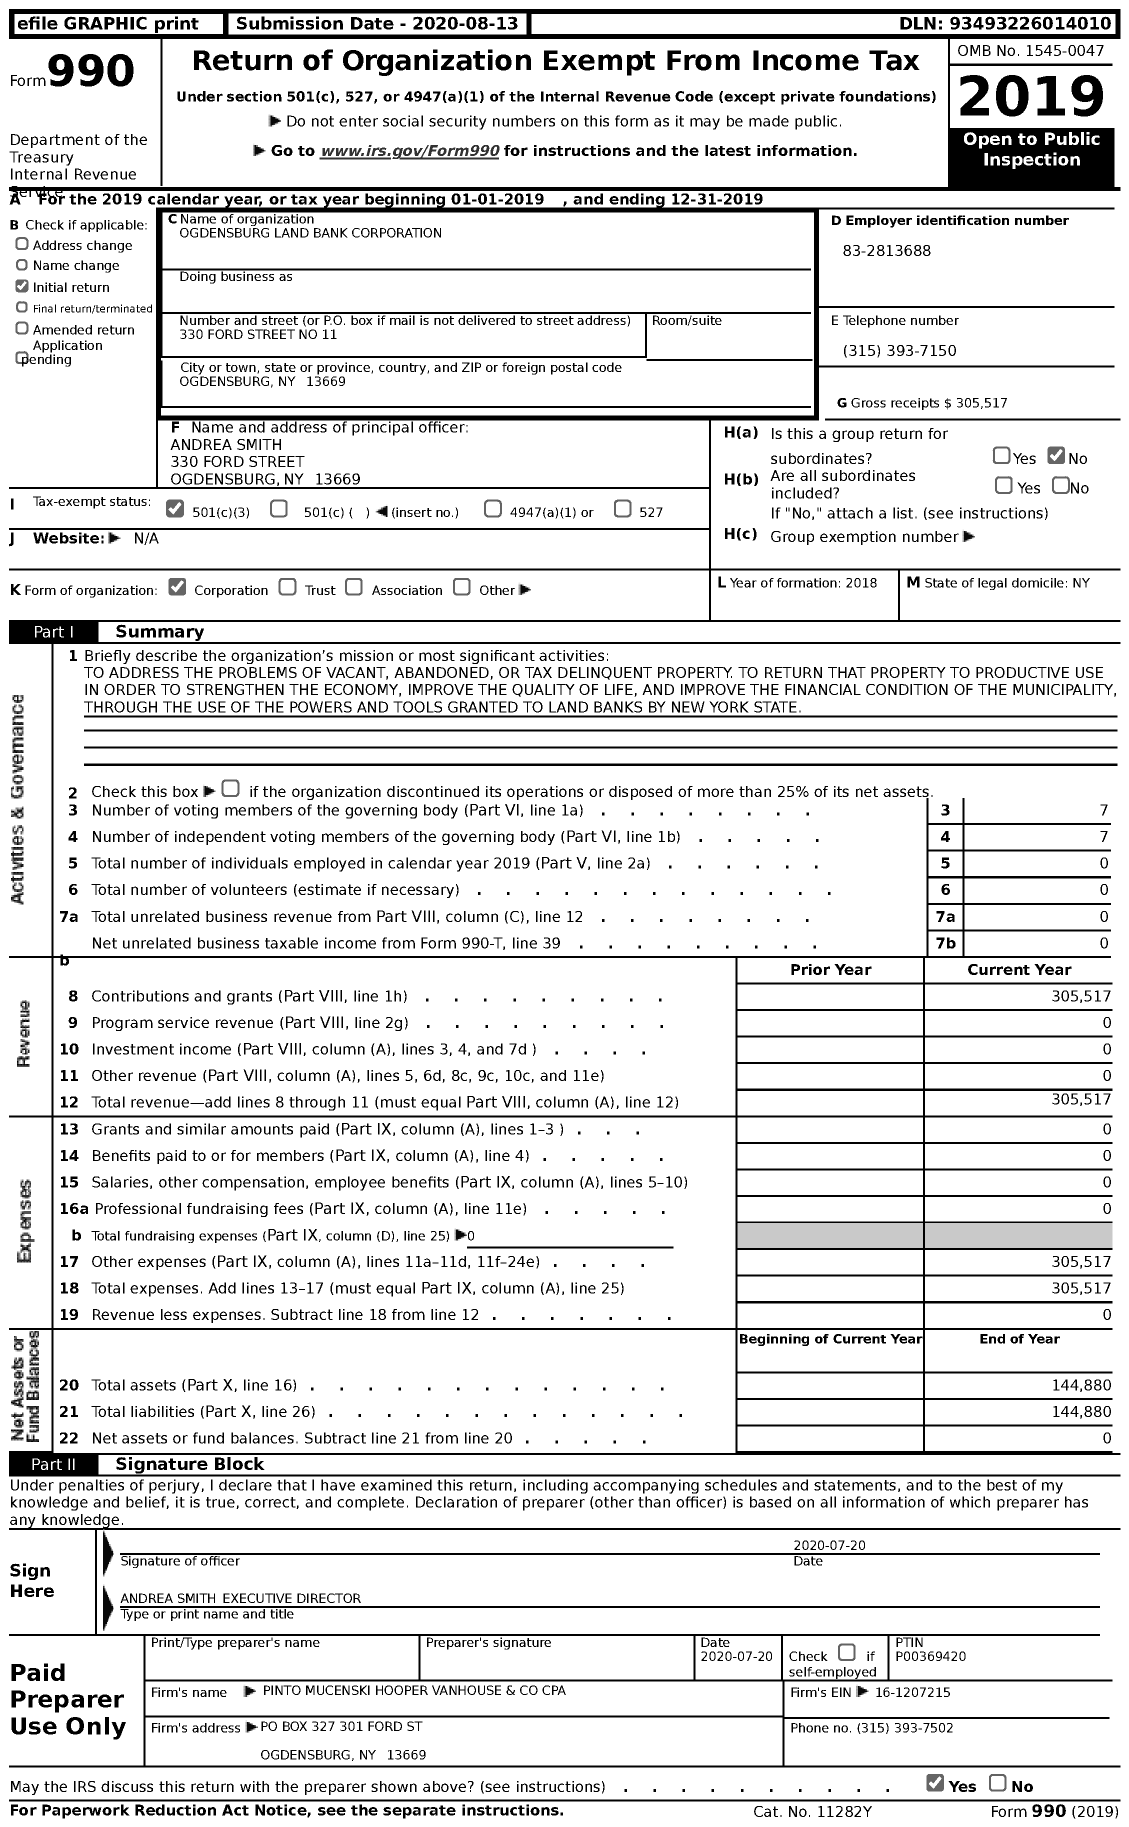 Image of first page of 2019 Form 990 for Ogdensburg Land Bank Corporation